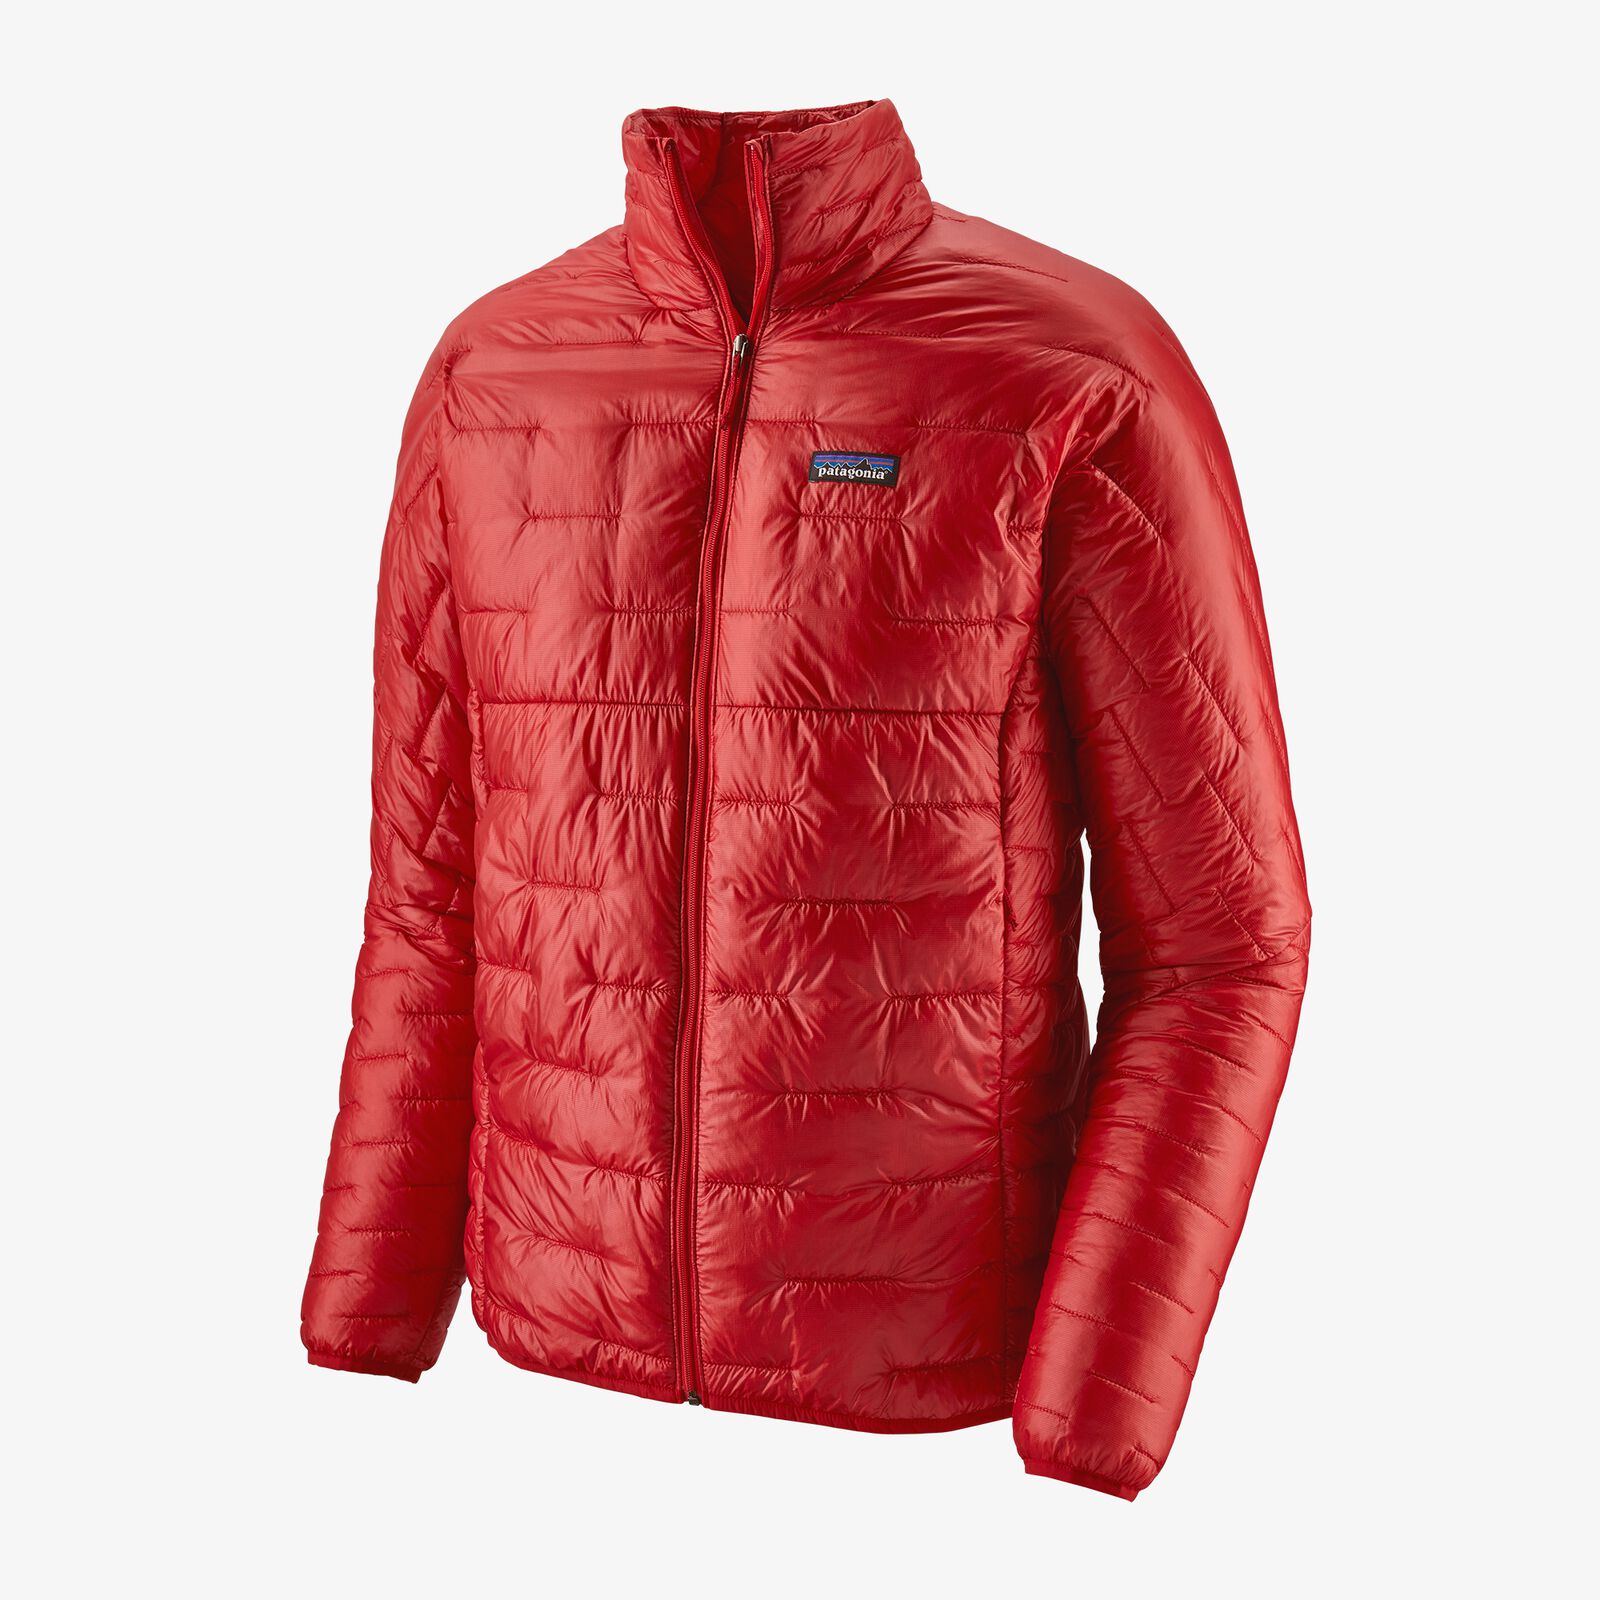 5. Patagonia Micro Puff Men’s Winter Jacket